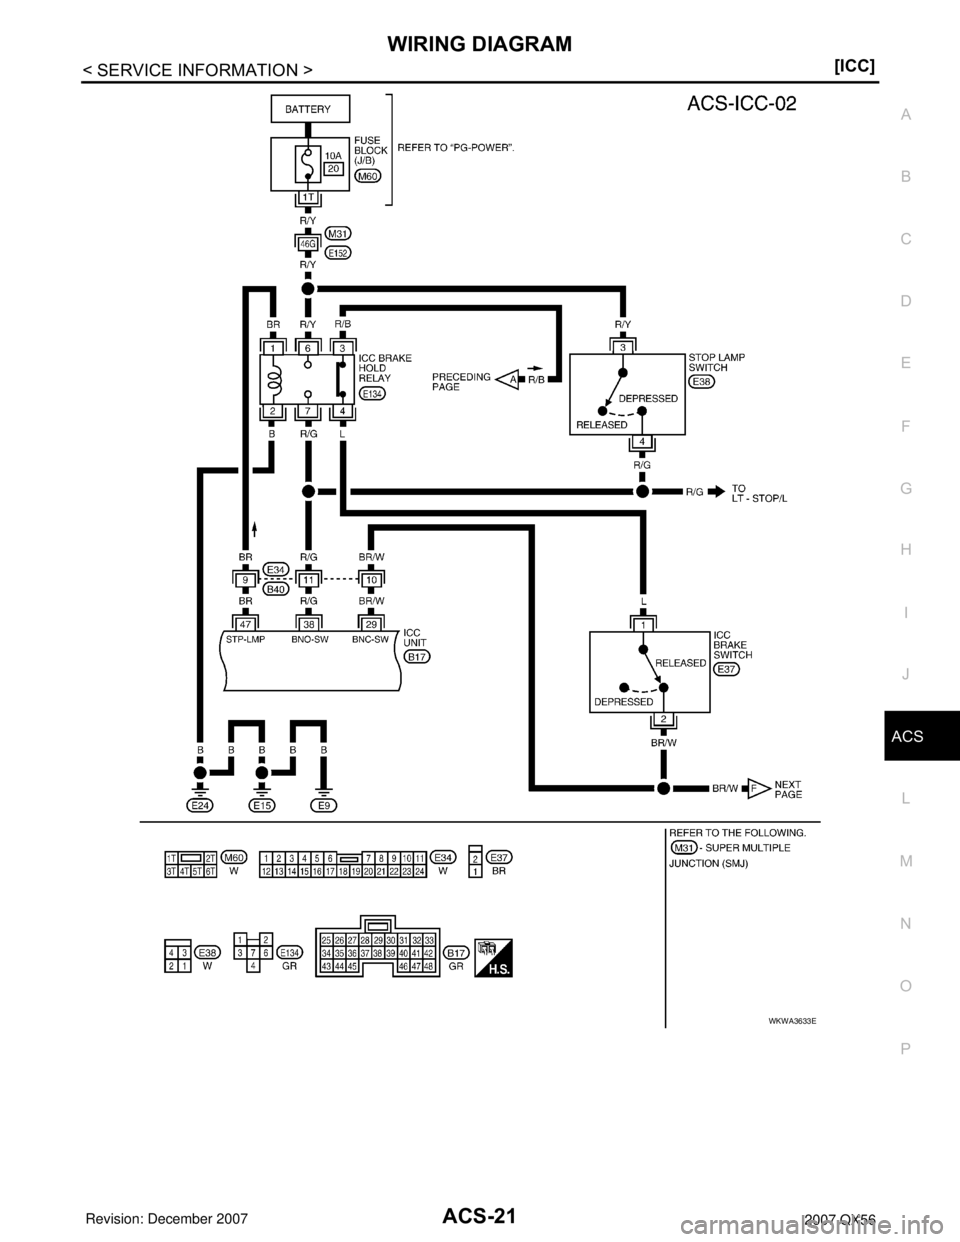 INFINITI QX56 2007  Factory Service Manual WIRING DIAGRAM
ACS-21
< SERVICE INFORMATION >[ICC]
C
D
E
F
G
H
I
J
L
MA
B
ACS
N
O
P
WKWA3633E 